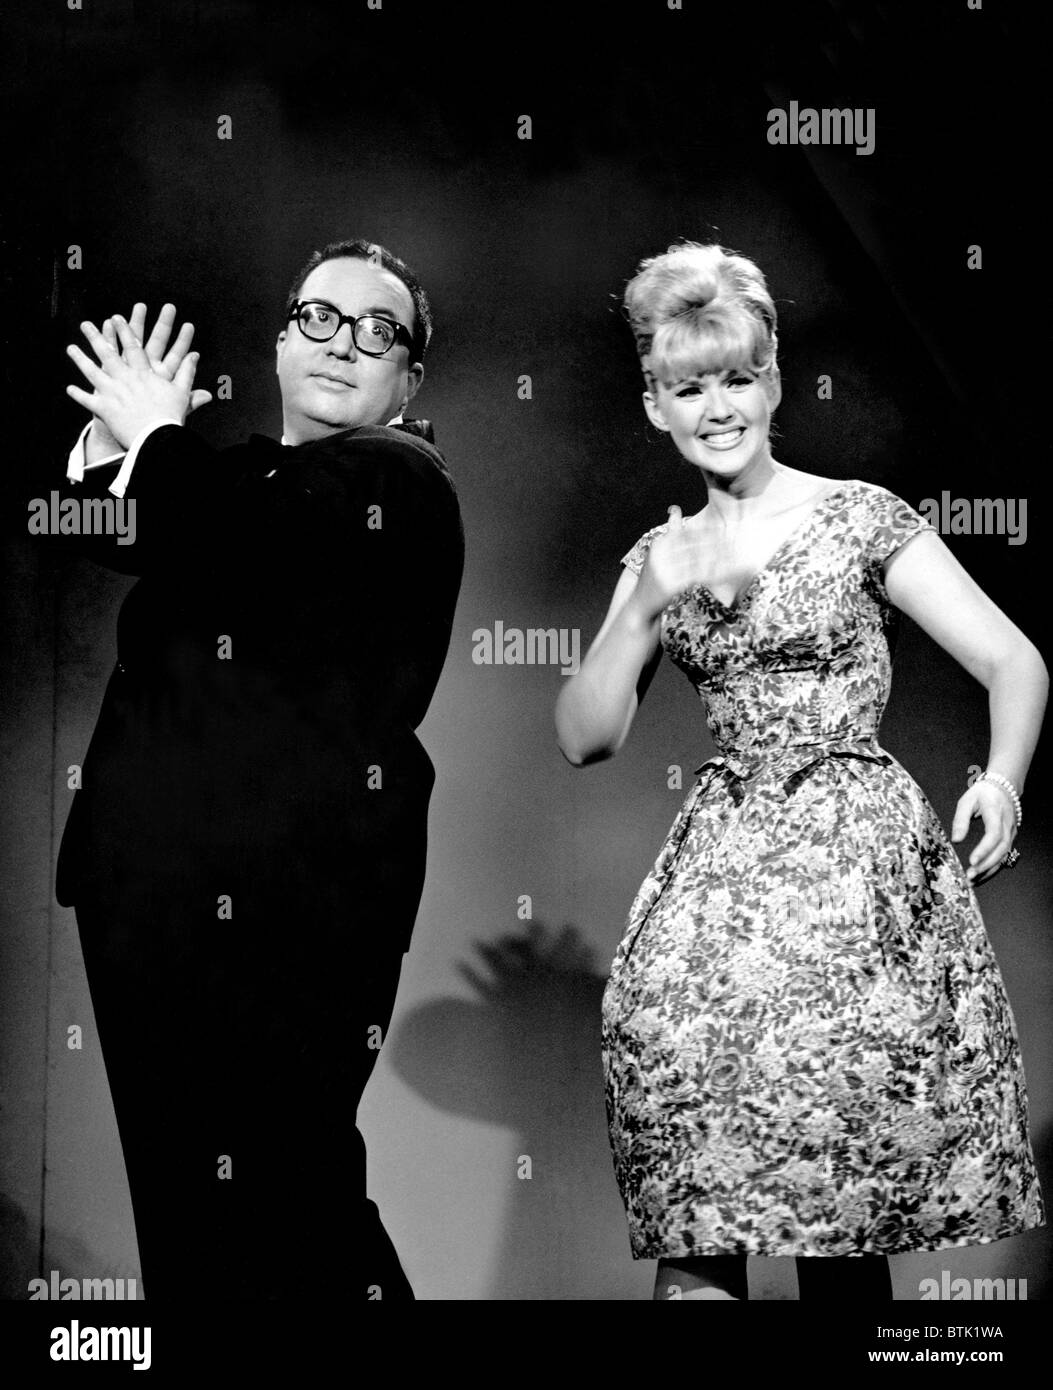 STUMP THE STARS, Allan Sherman, Connie Stevens, (aired 06-17-63), 1962-63 Stock Photo